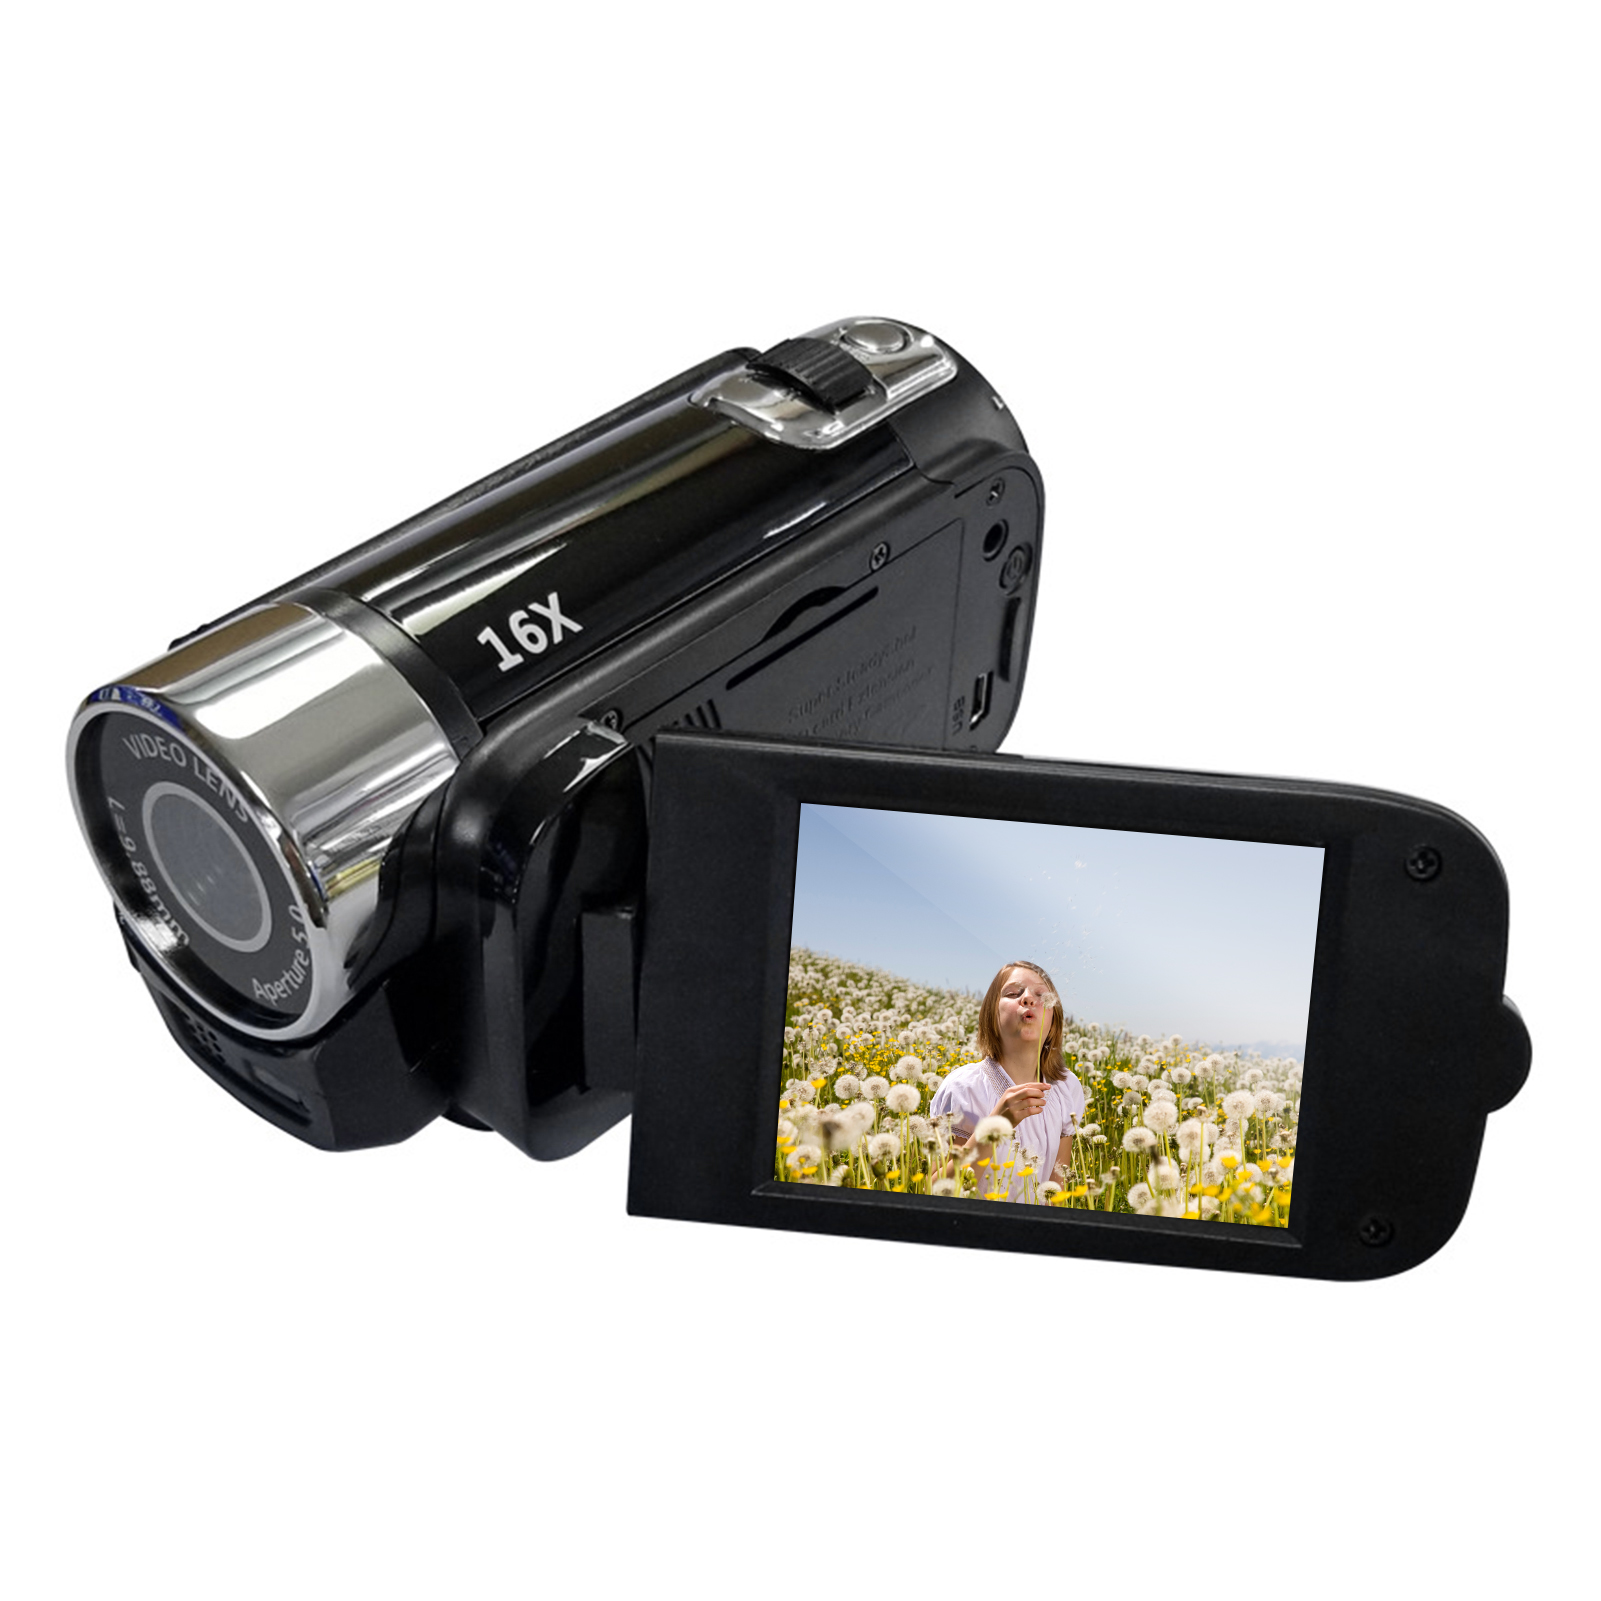 HOT SALE Aibecy Portable 1080P High Definition Digital Video Camera DV